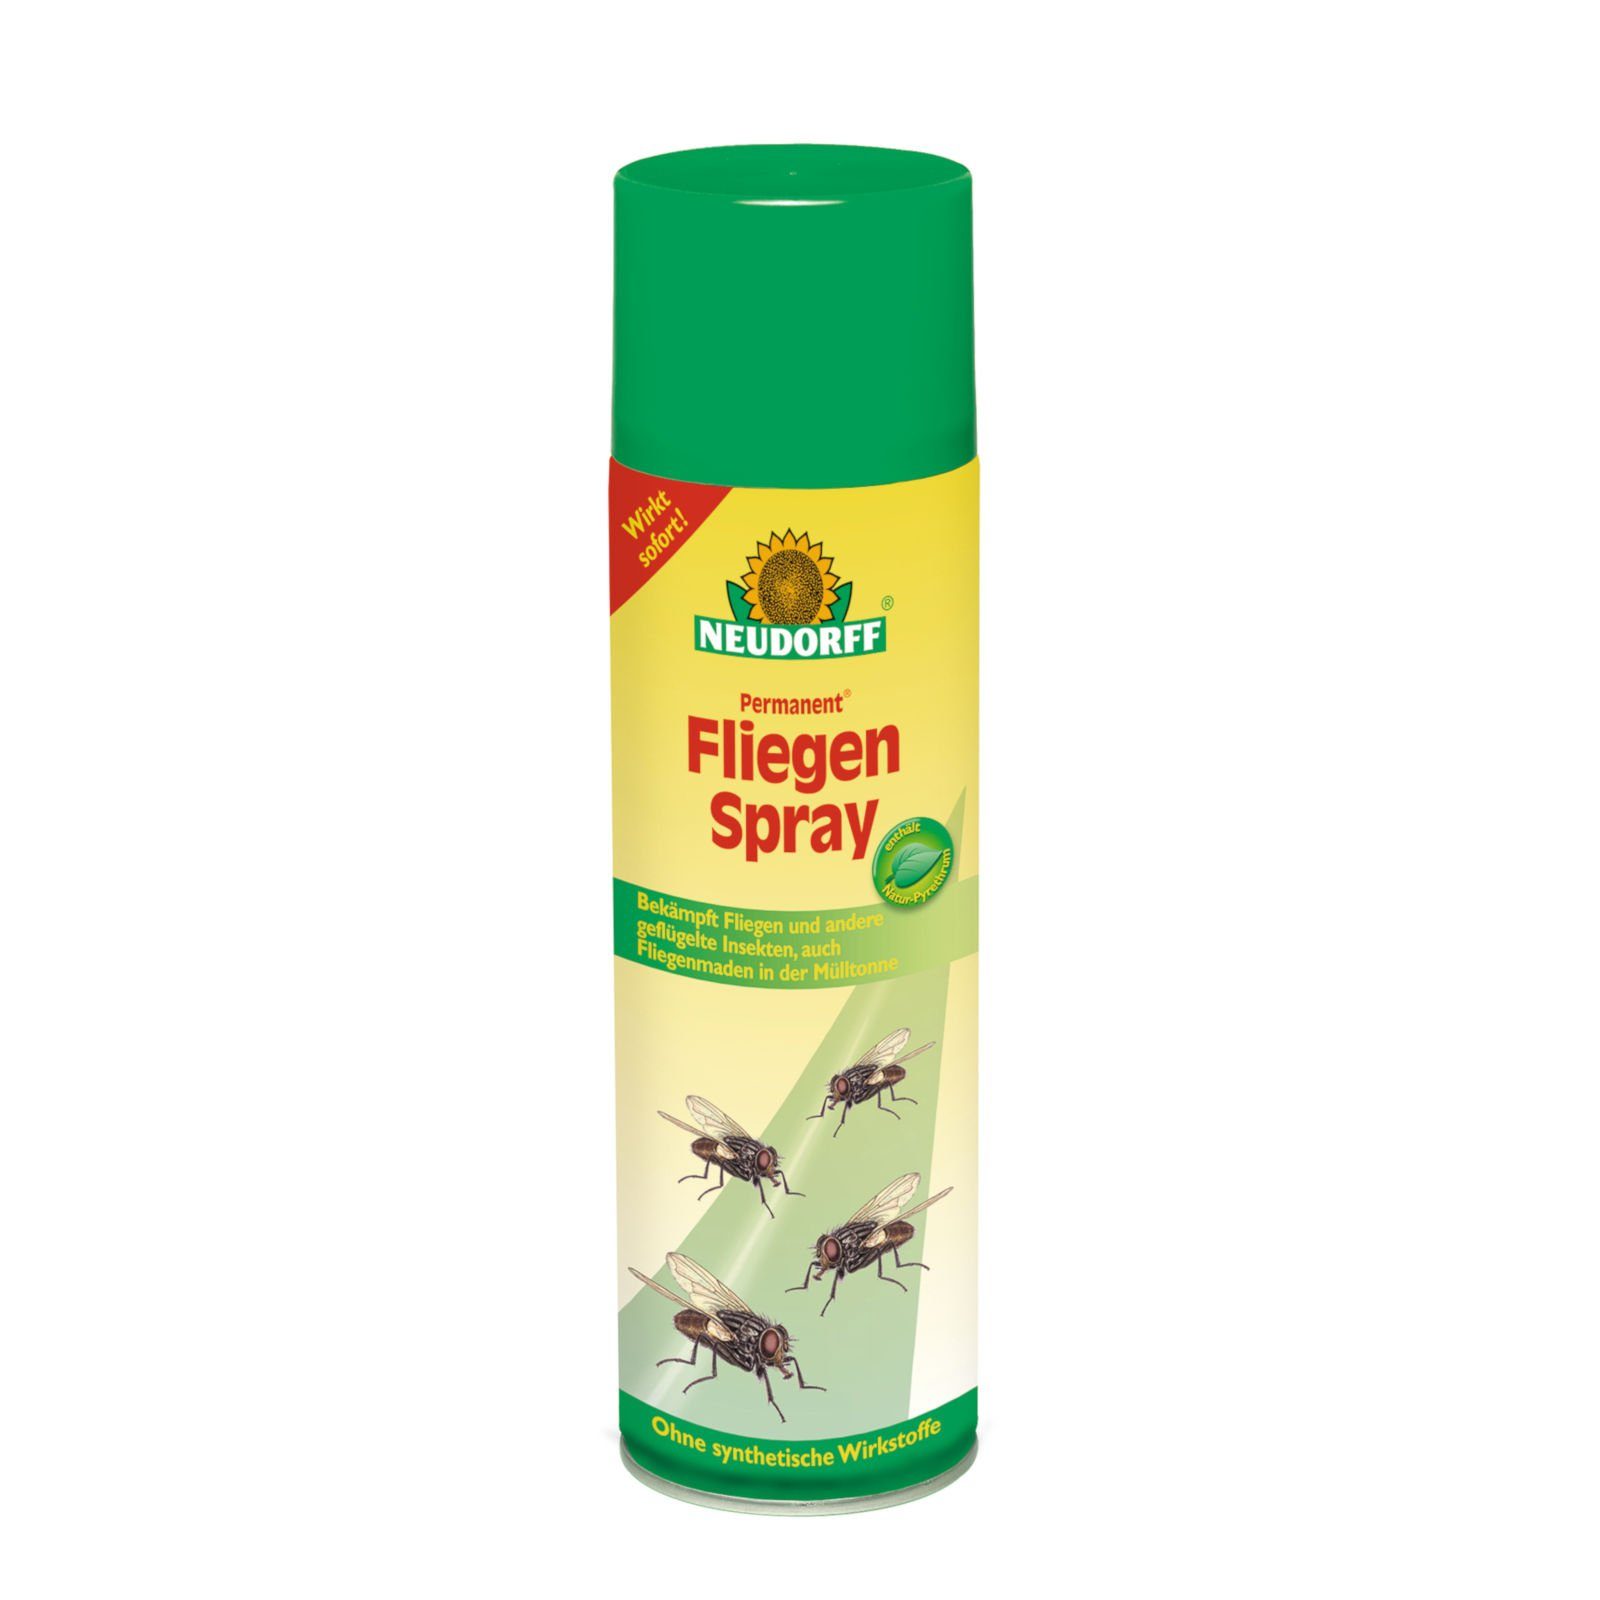 500 3x ml FliegenSpray Permanent Insektenspray Neudorff -